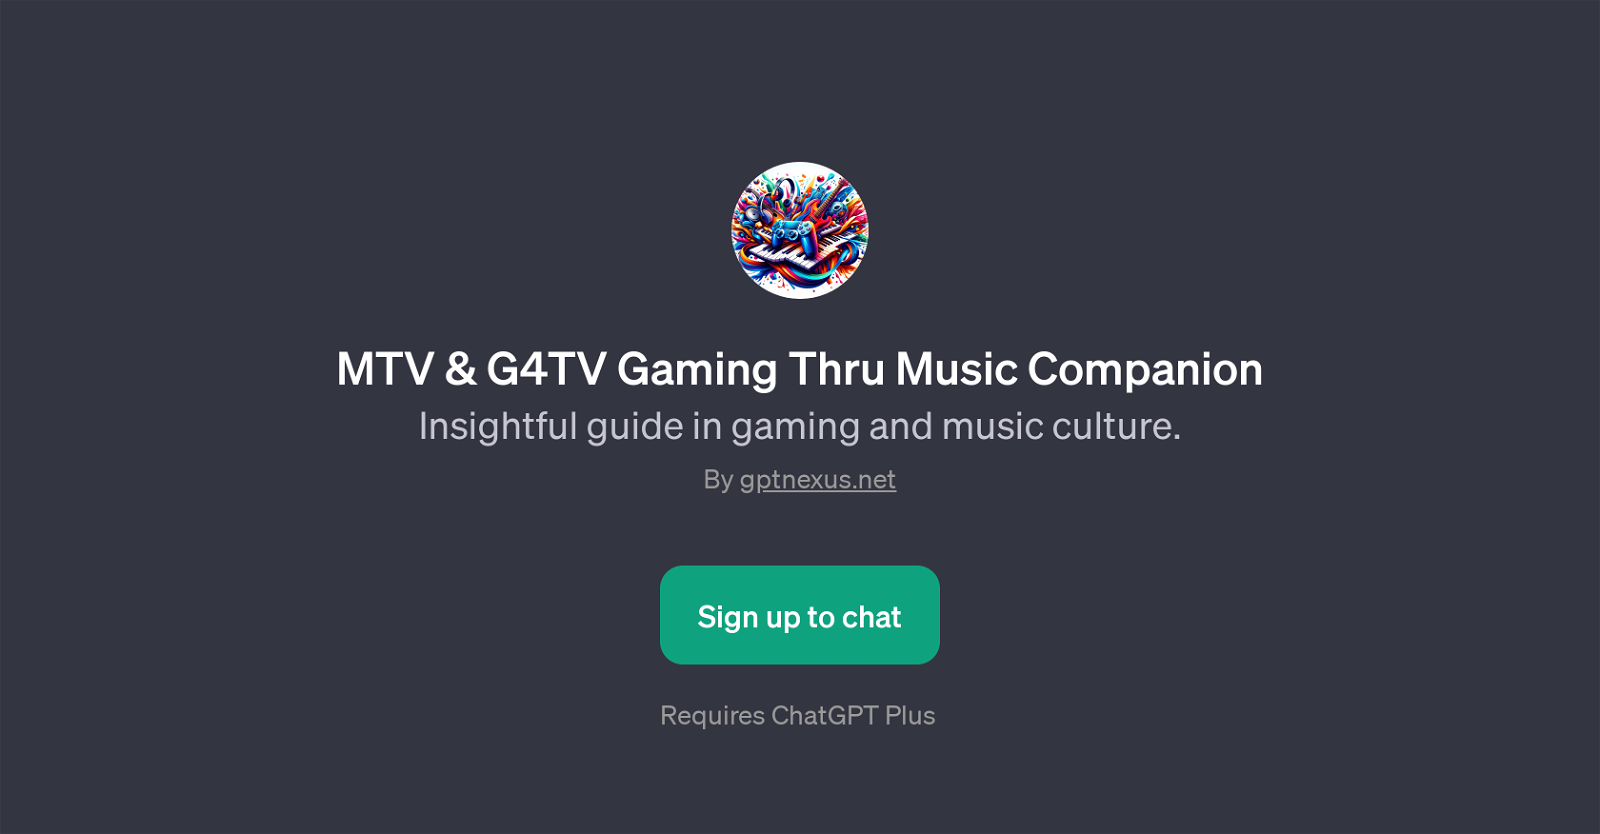 MTV & G4TV Gaming Thru Music Companion website